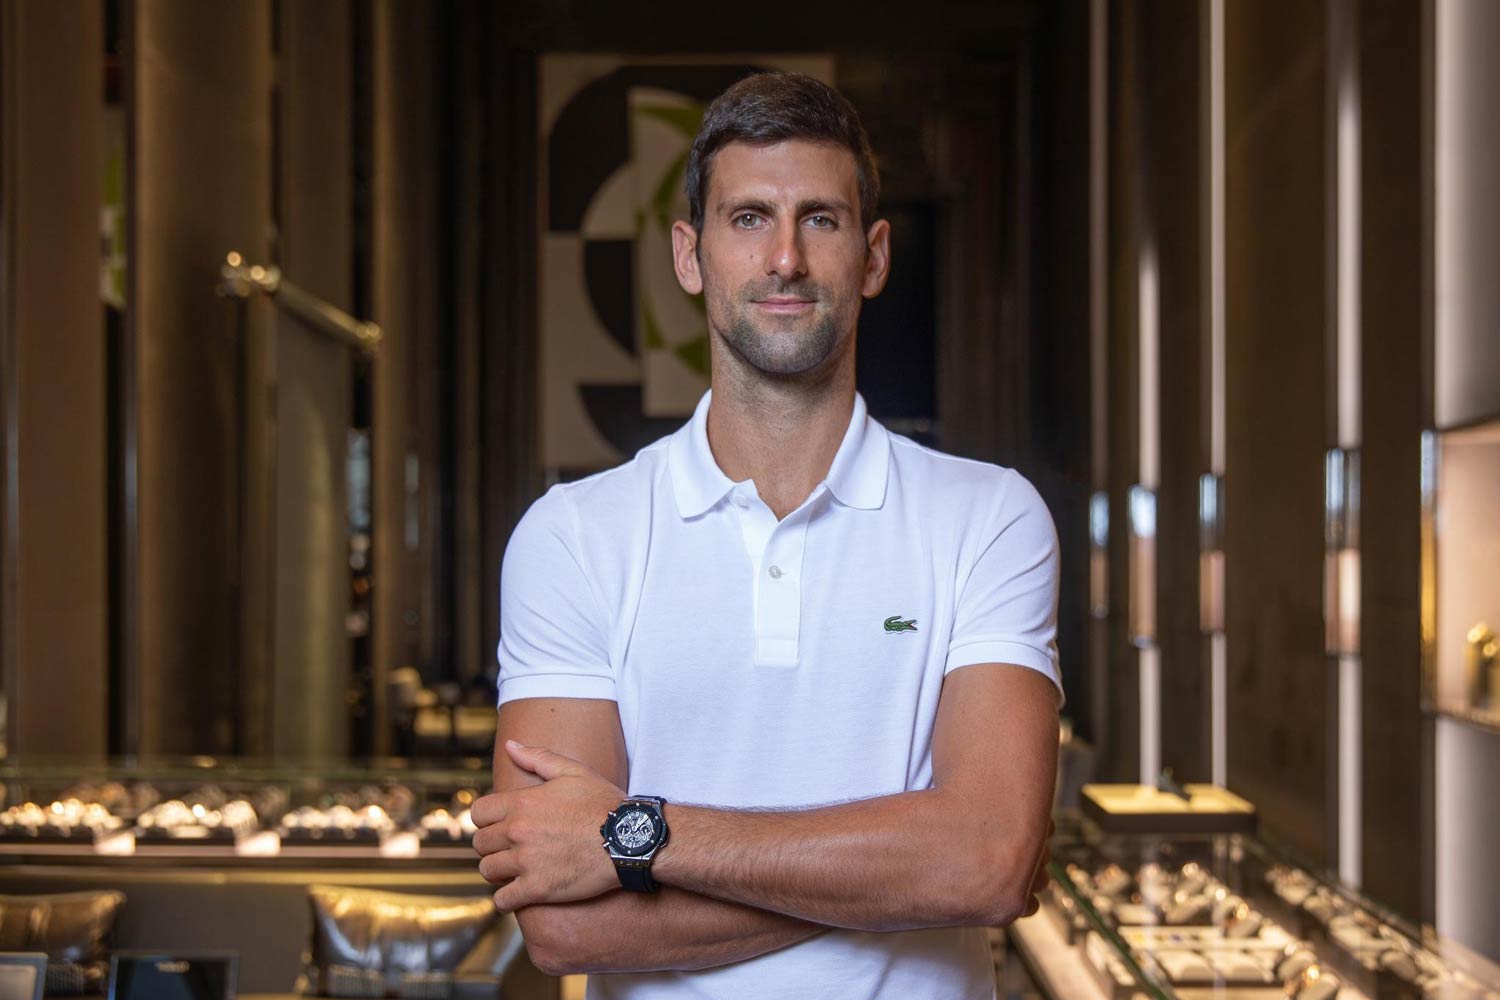 Novak Djokovic has joined the Hublot family since August 2021.